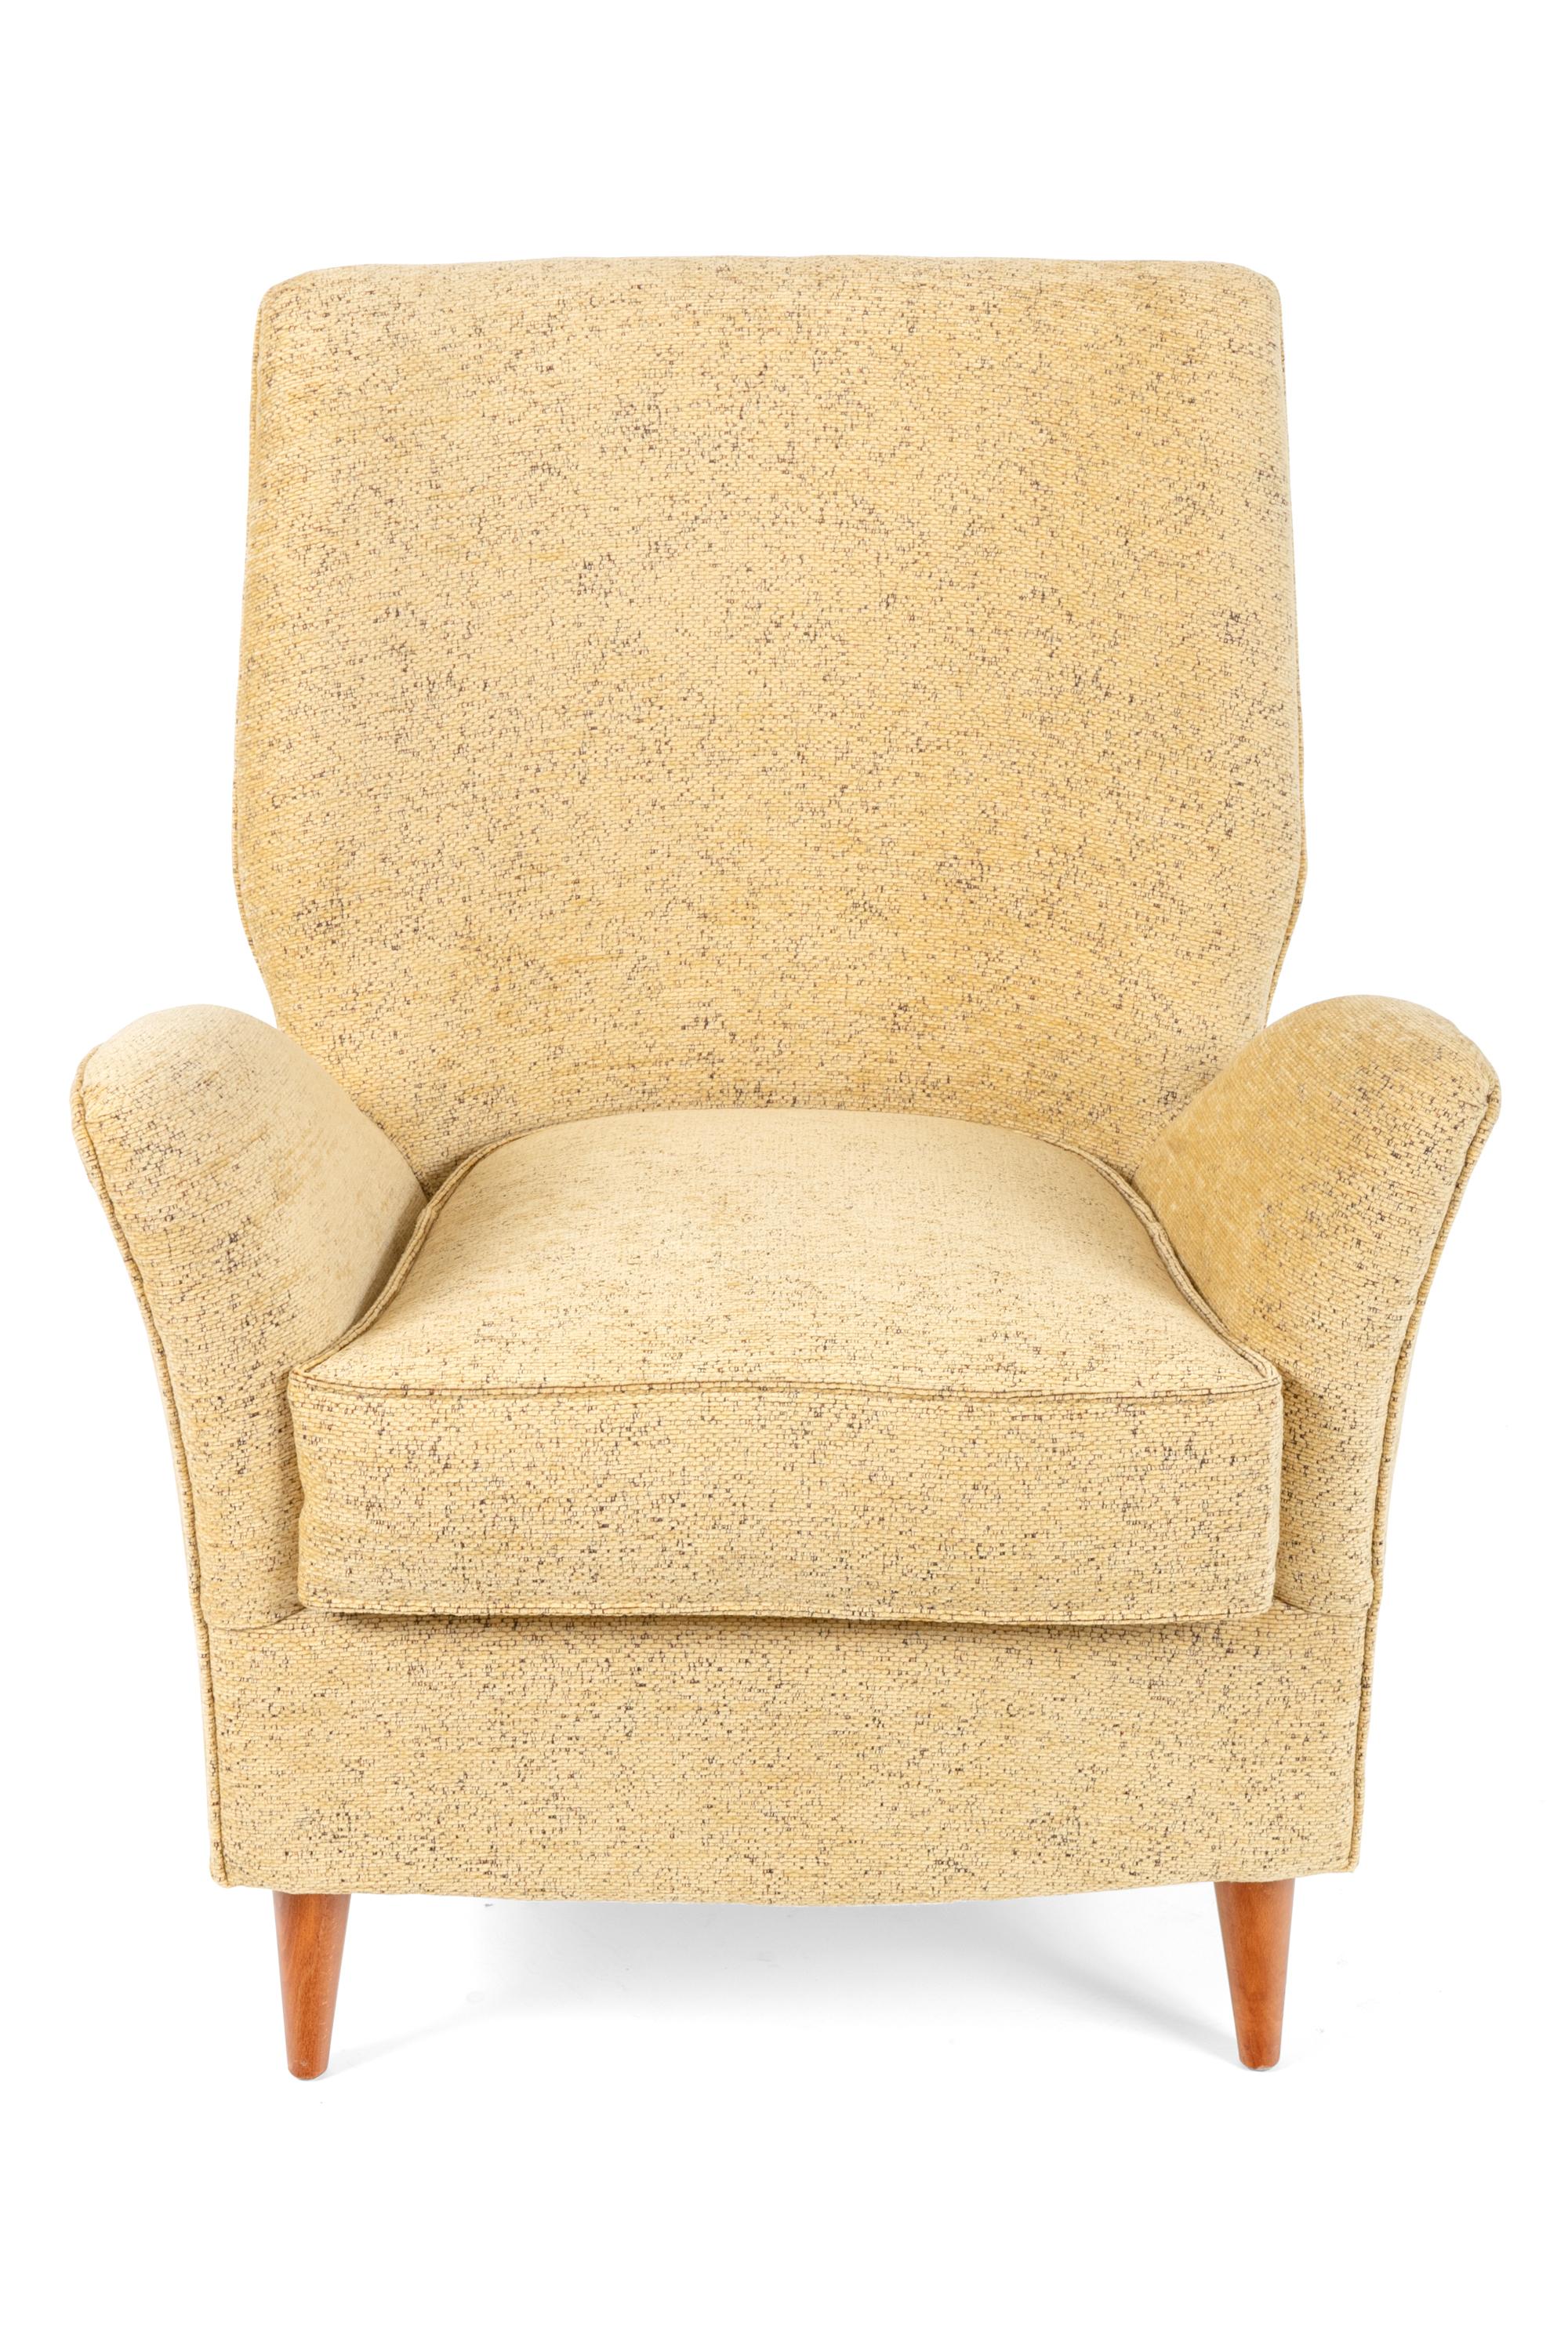 Mid-Century Modern Pair of Yellow Italian Midcentury Style Lounge Chairs